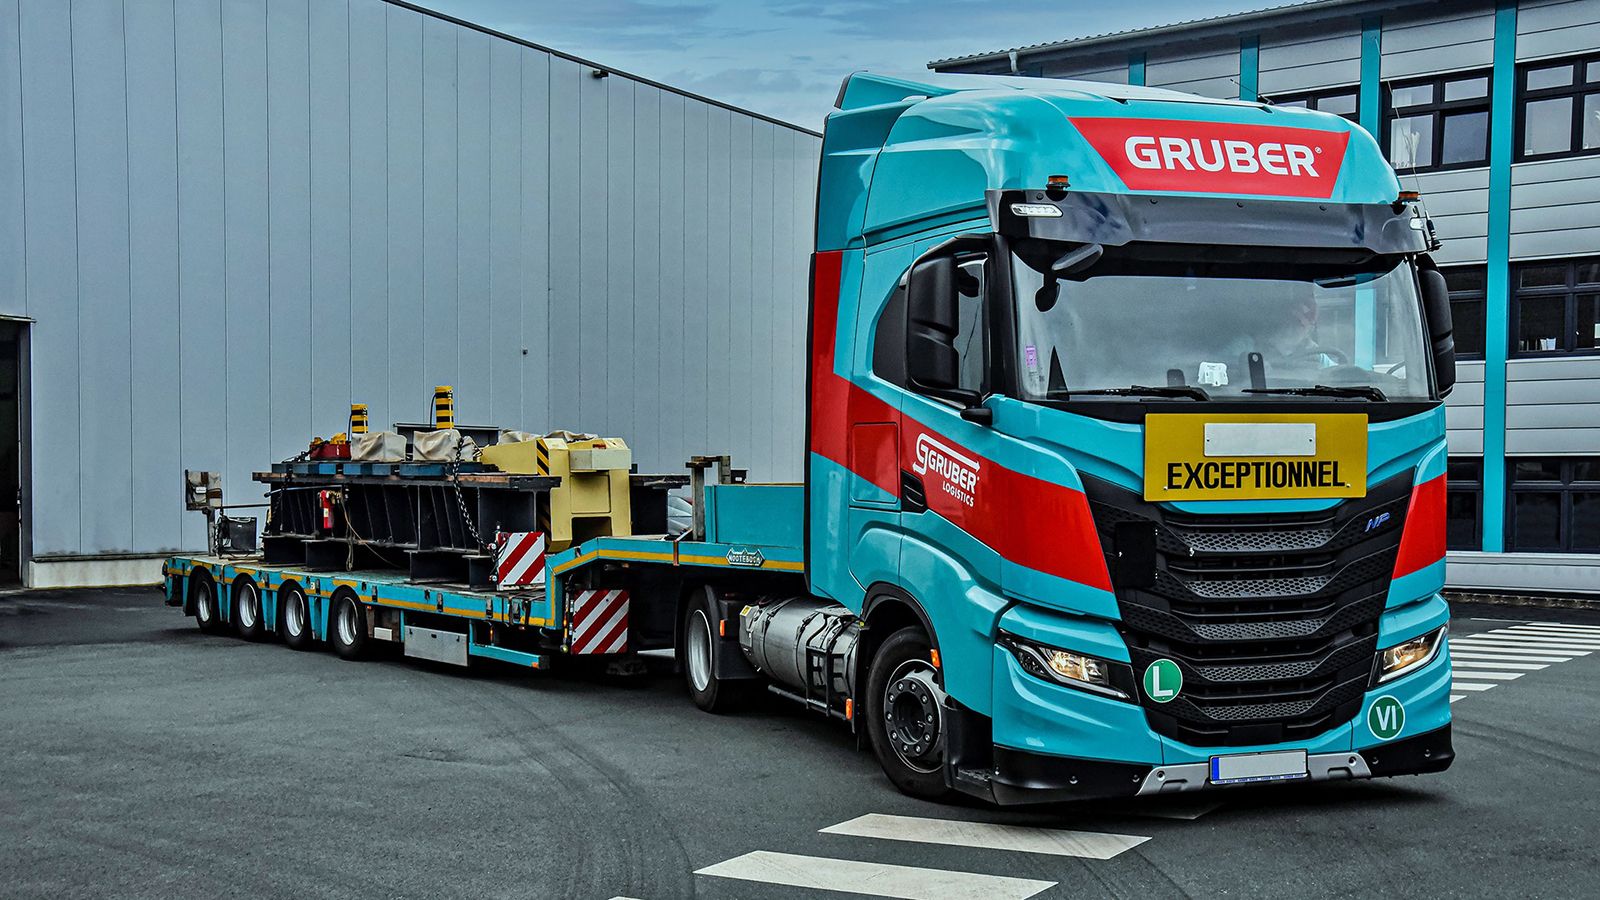 Iveco και Gruber Logistics στις ειδικές μεταφορές με ένα S-WAY που λειτουργεί με φυσικό αέριο (LNG) και εμφανίζει βάρος συρμού 50 τόνων.